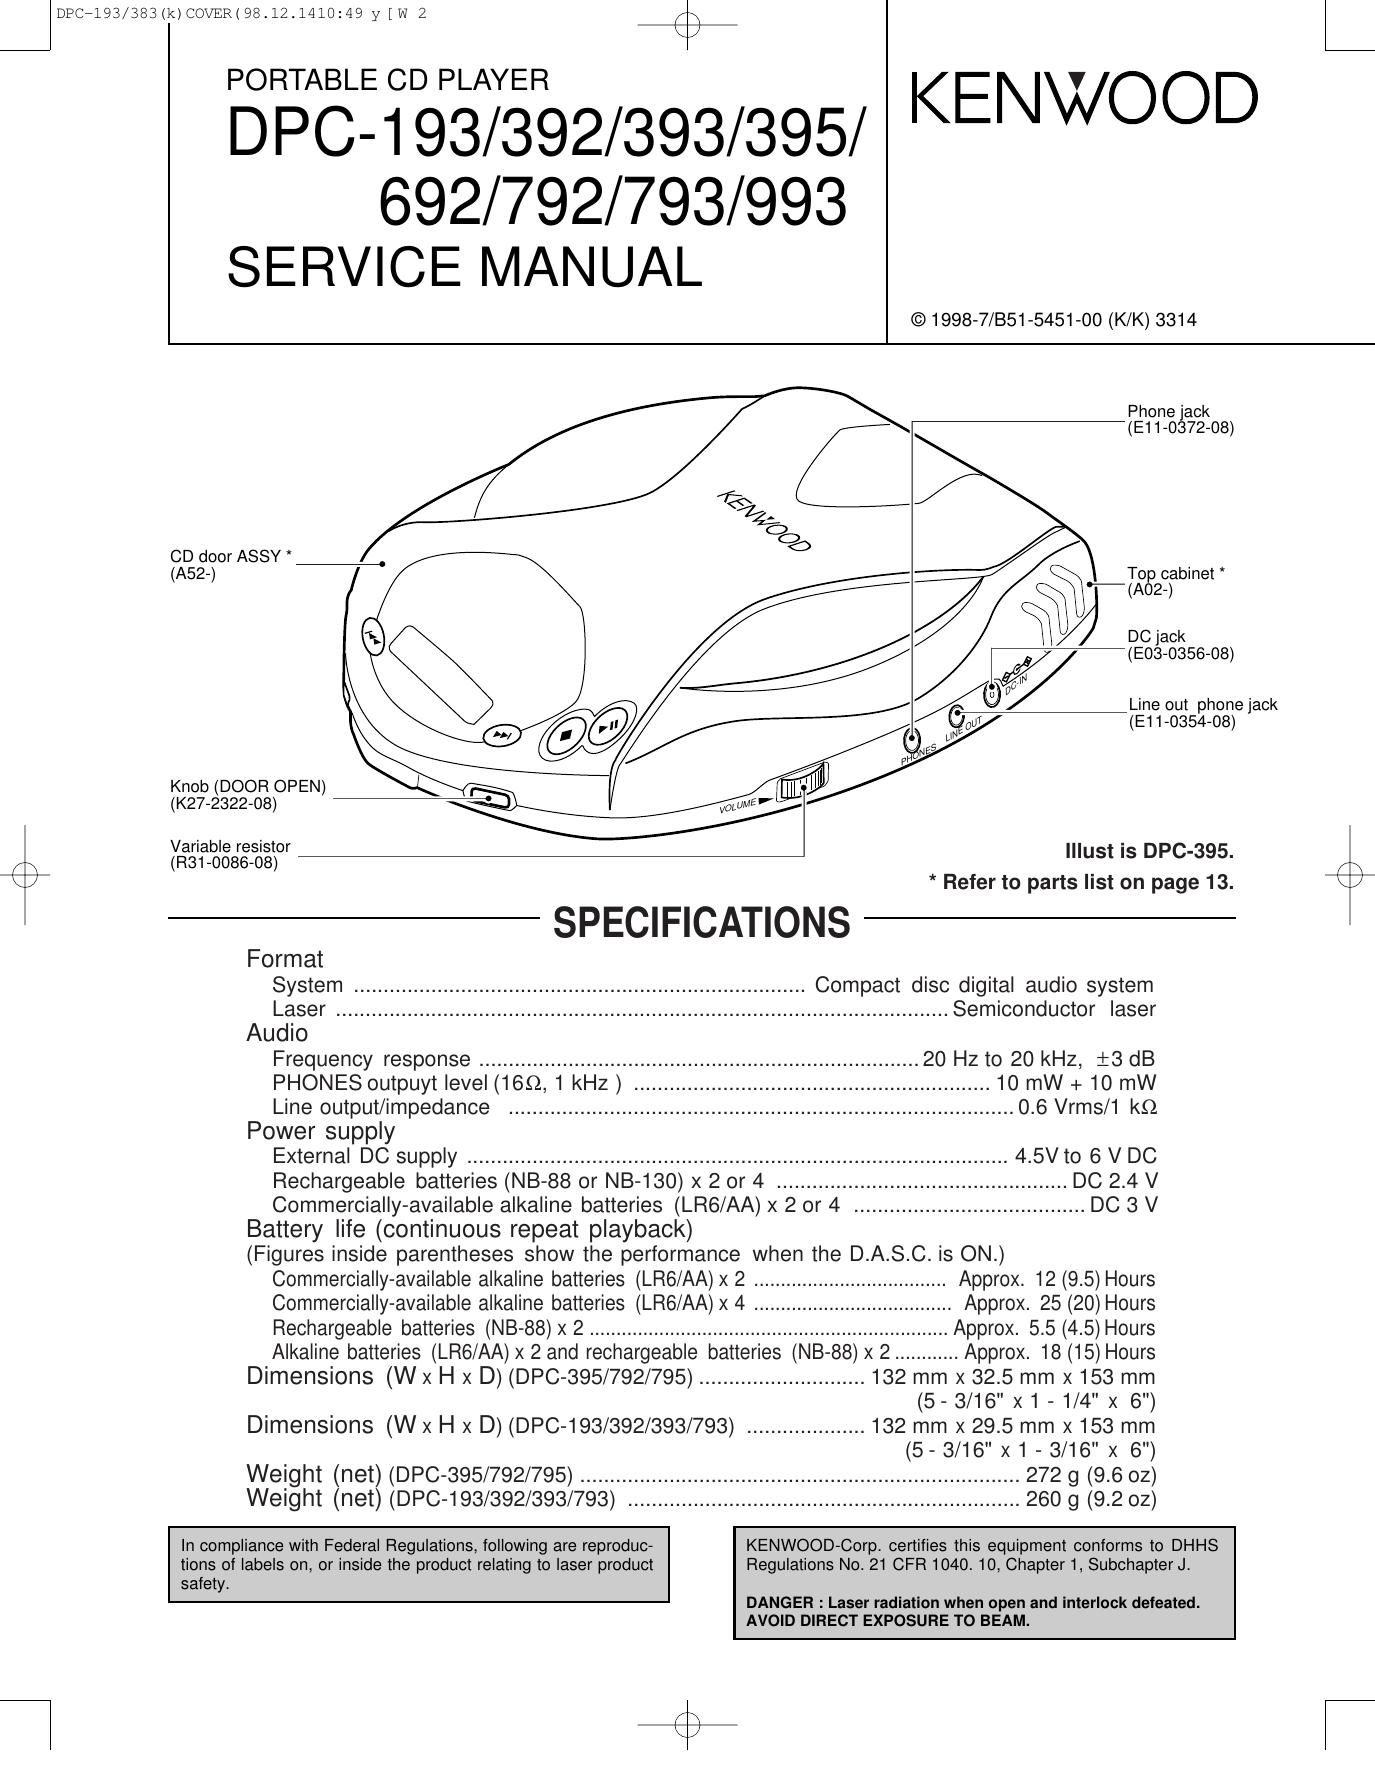 Kenwood DPC 793 Service Manual